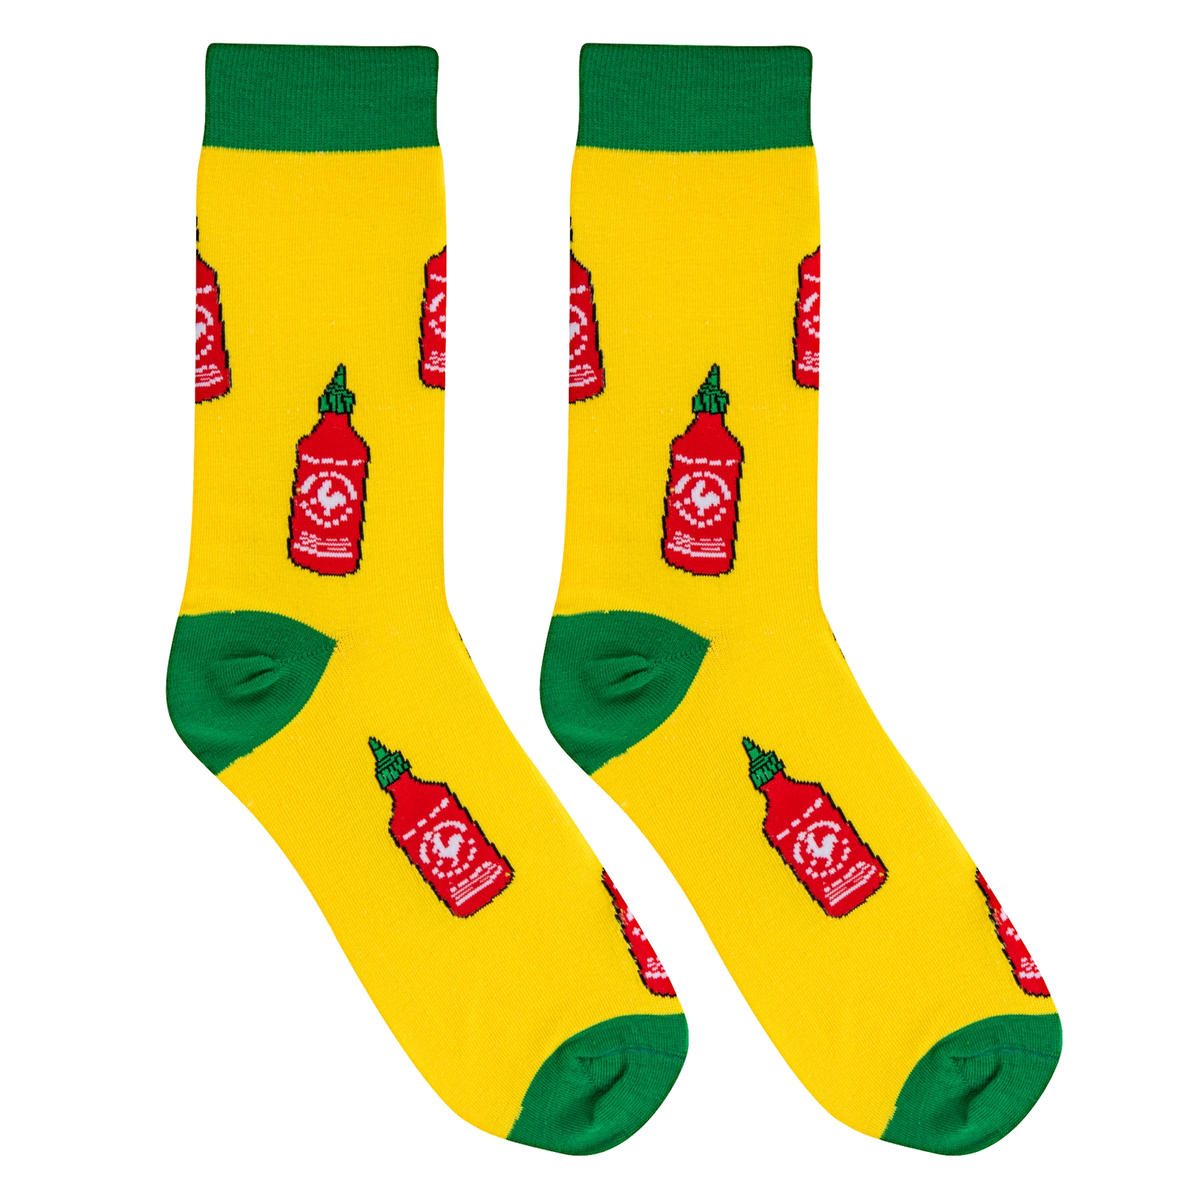 Sriracha Chili Sauce Socks